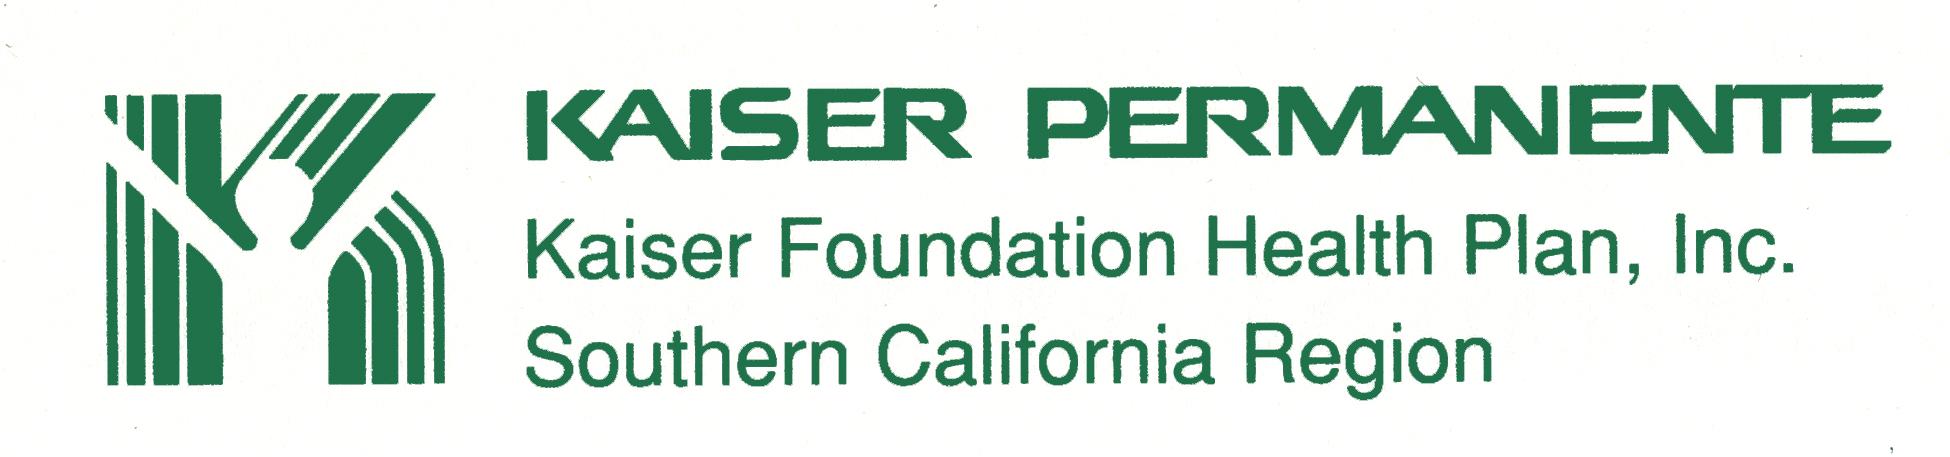 Kaiser Permanente Logo - Kaiser Permanente brand identity Archives History of Total Health